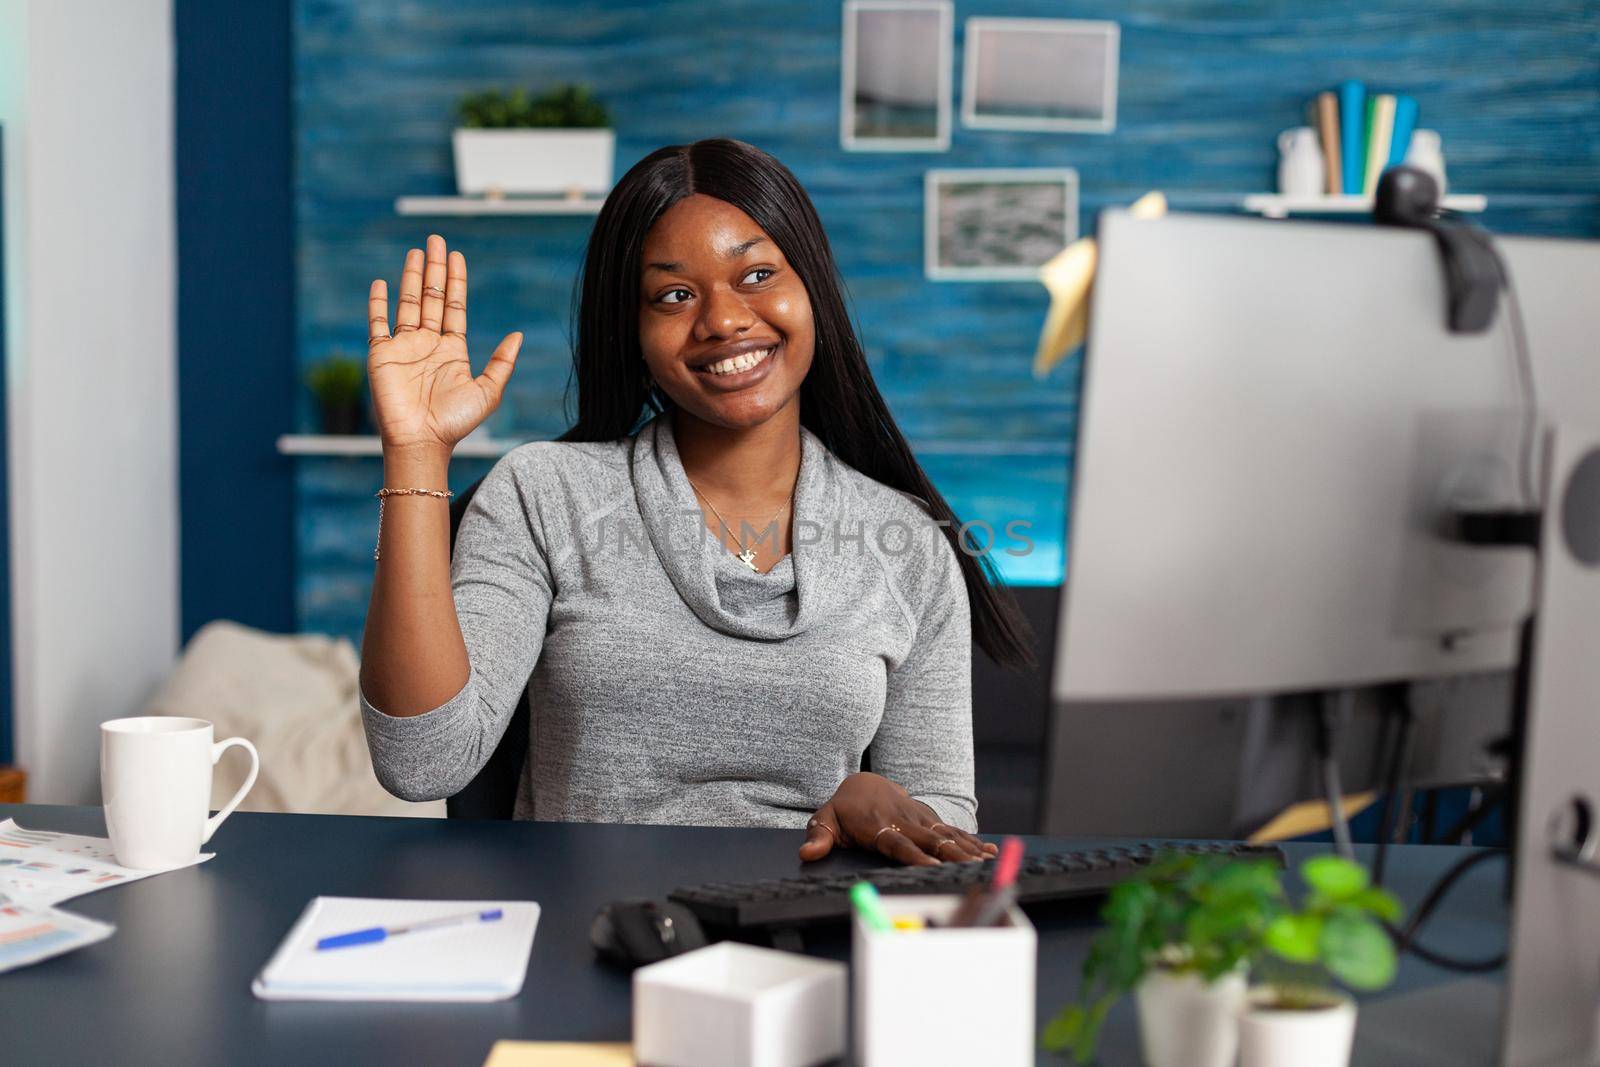 Student with dark skin waving university teacher during online videocall meeting by DCStudio